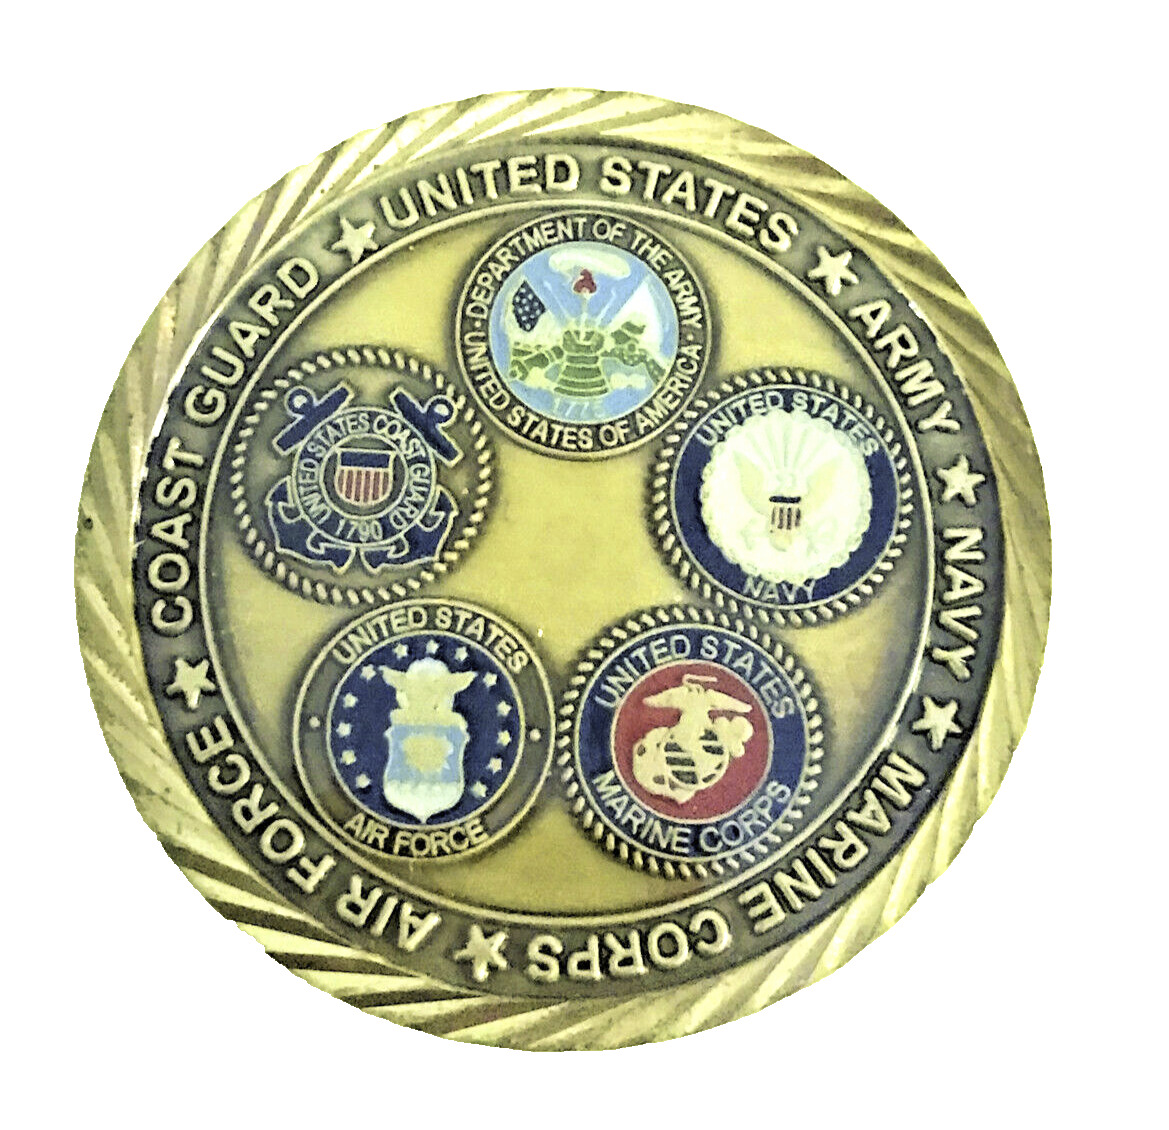 Veteran's Organization Harrisburg PA 11-11-11 Challenge Coin